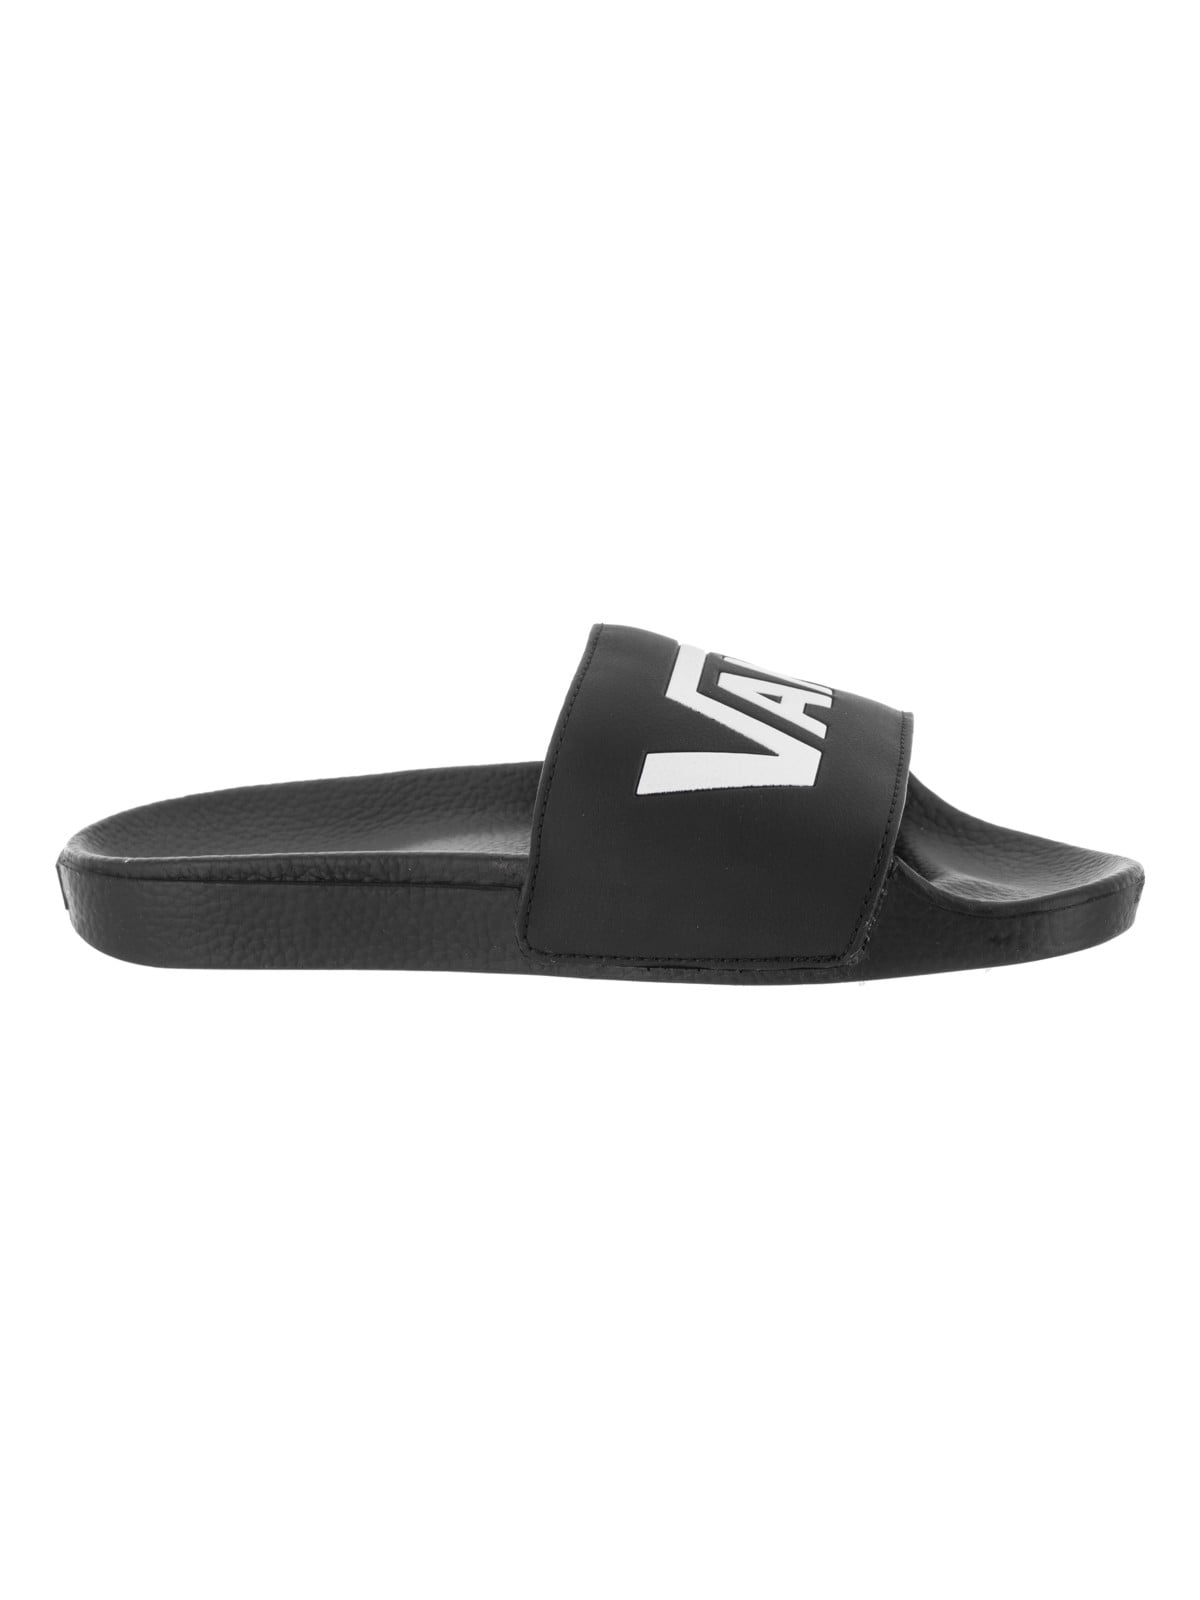 Slide-On (Vans) Sandal | Walmart 